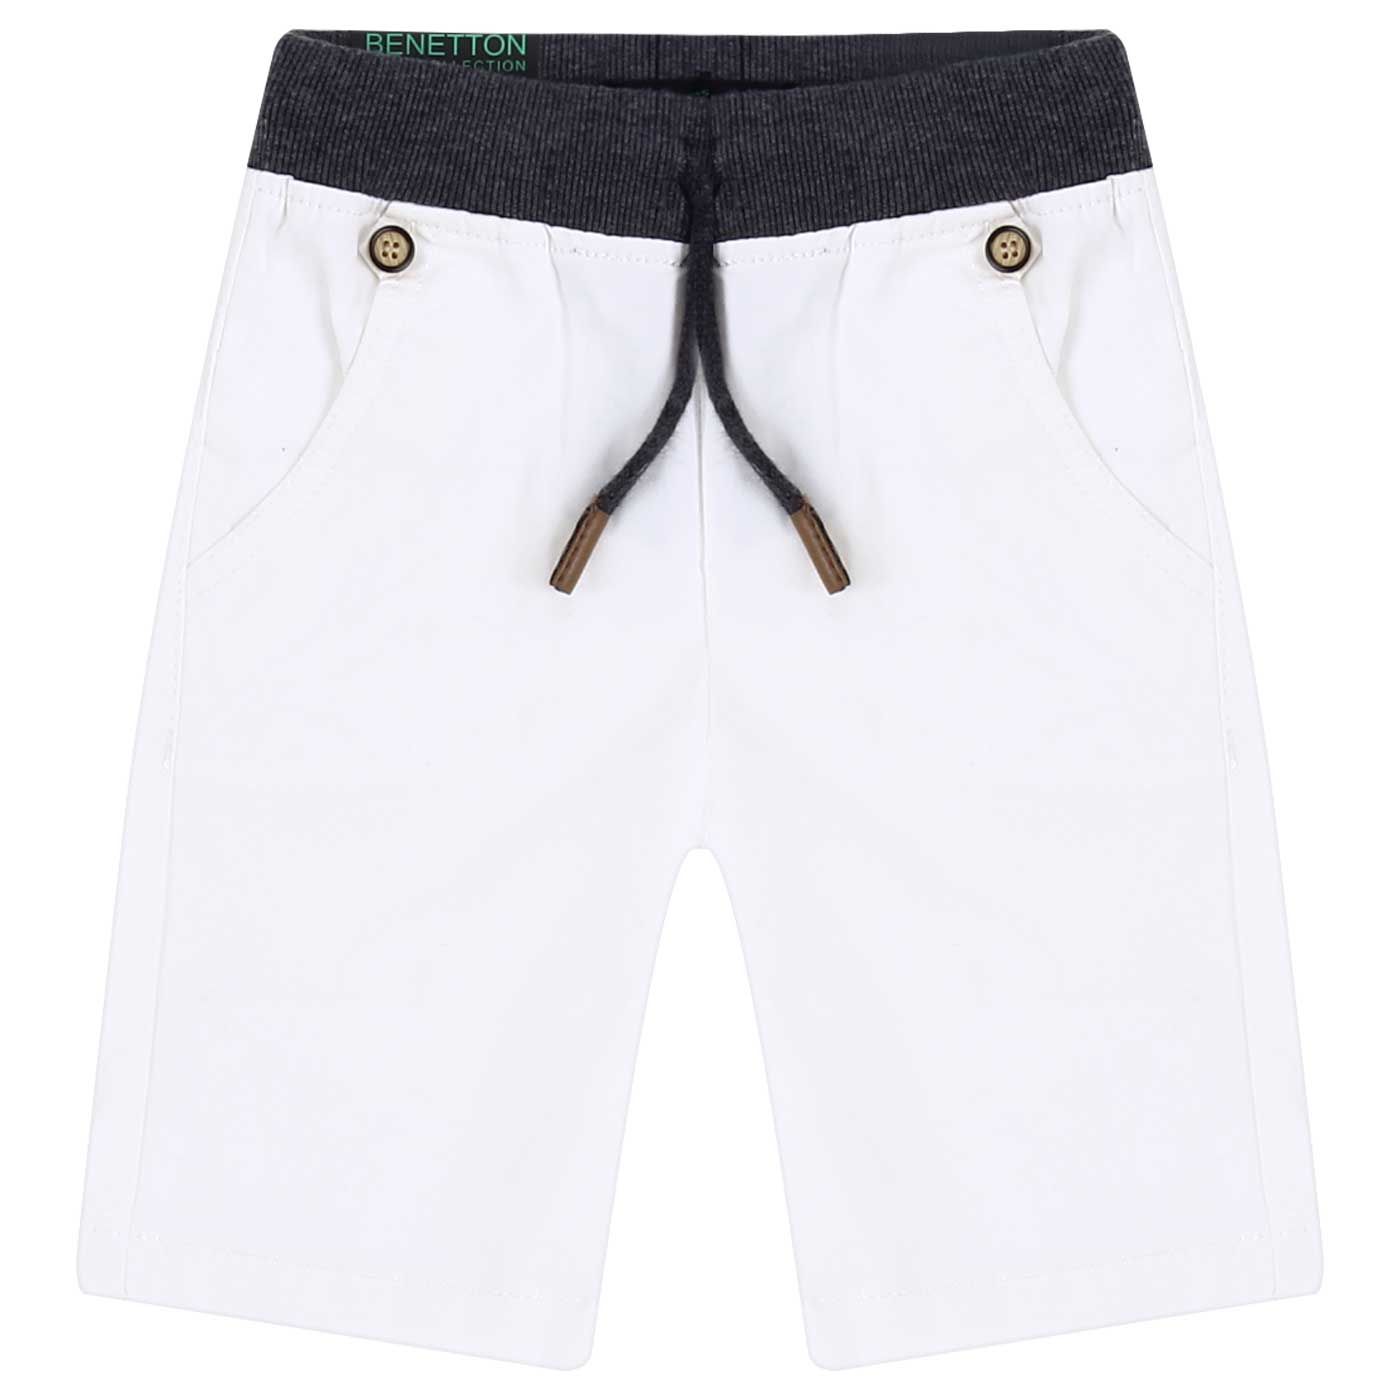 Kiddiewear Baby Boy Short Pants-White-6-9M - 1